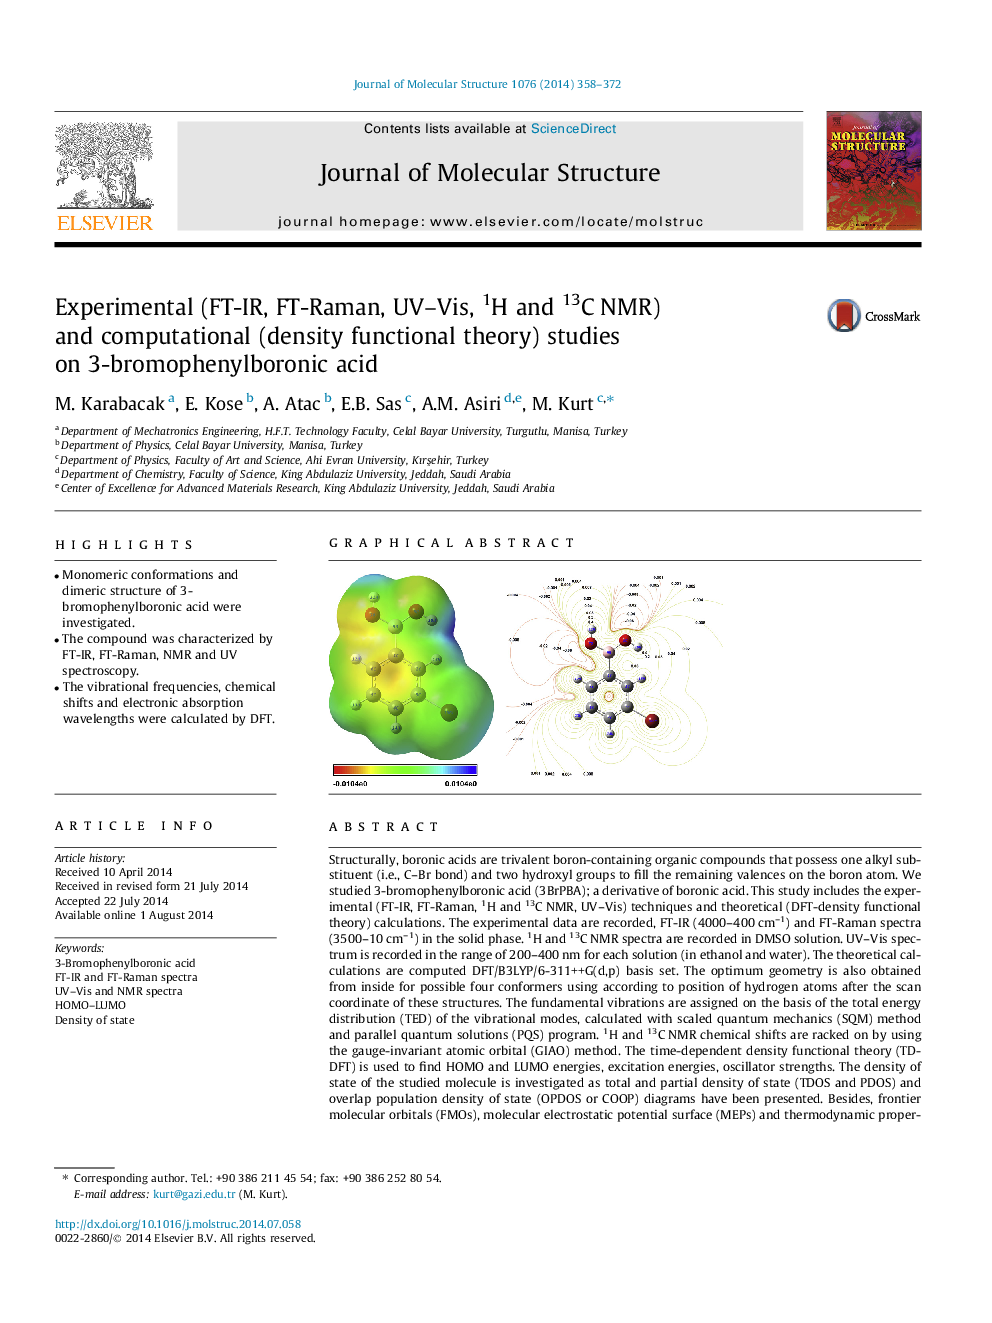 Experimental (FT-IR, FT-Raman, UV–Vis, 1H and 13C NMR) and computational (density functional theory) studies on 3-bromophenylboronic acid